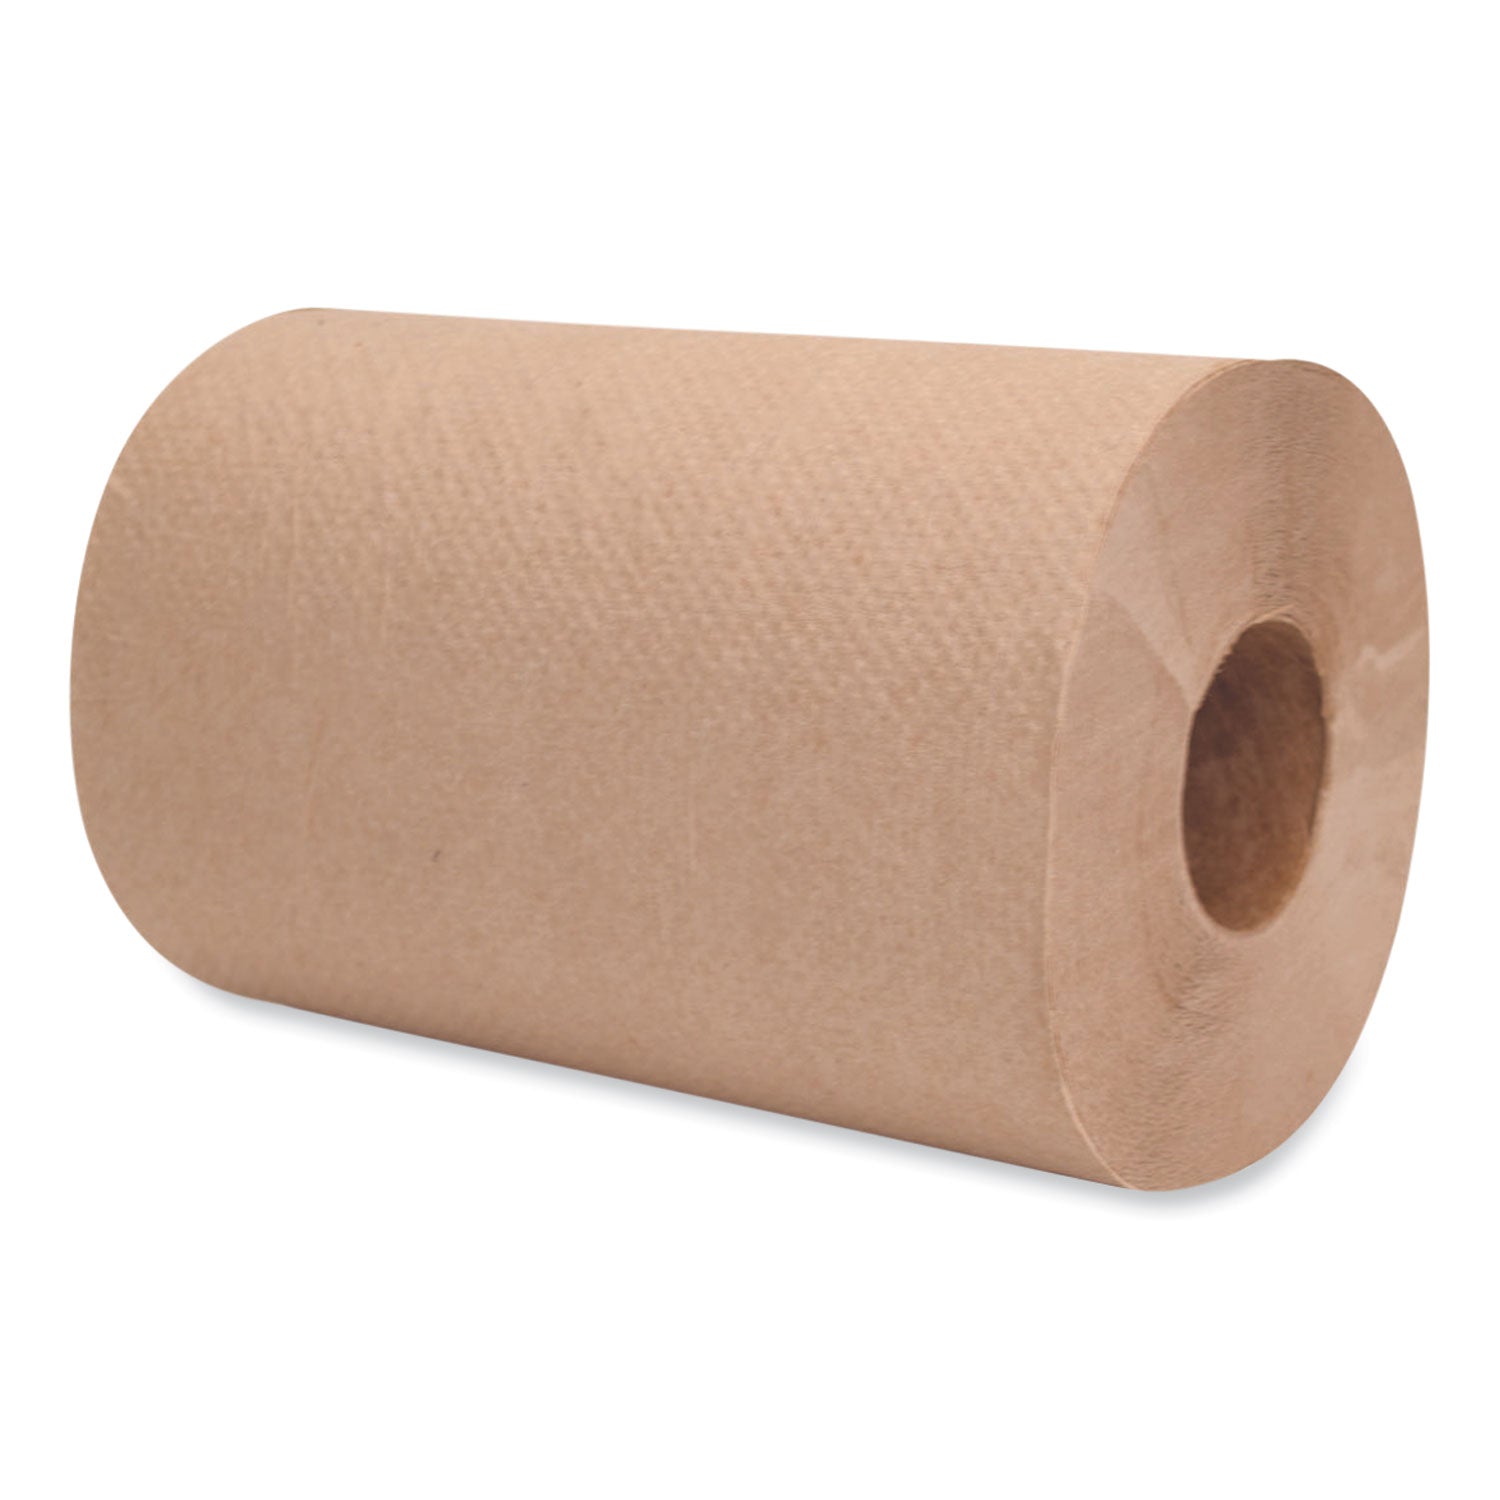 morsoft-universal-roll-towels-1-ply-788-x-300-ft-brown-12-rolls-carton_mor12300r - 5